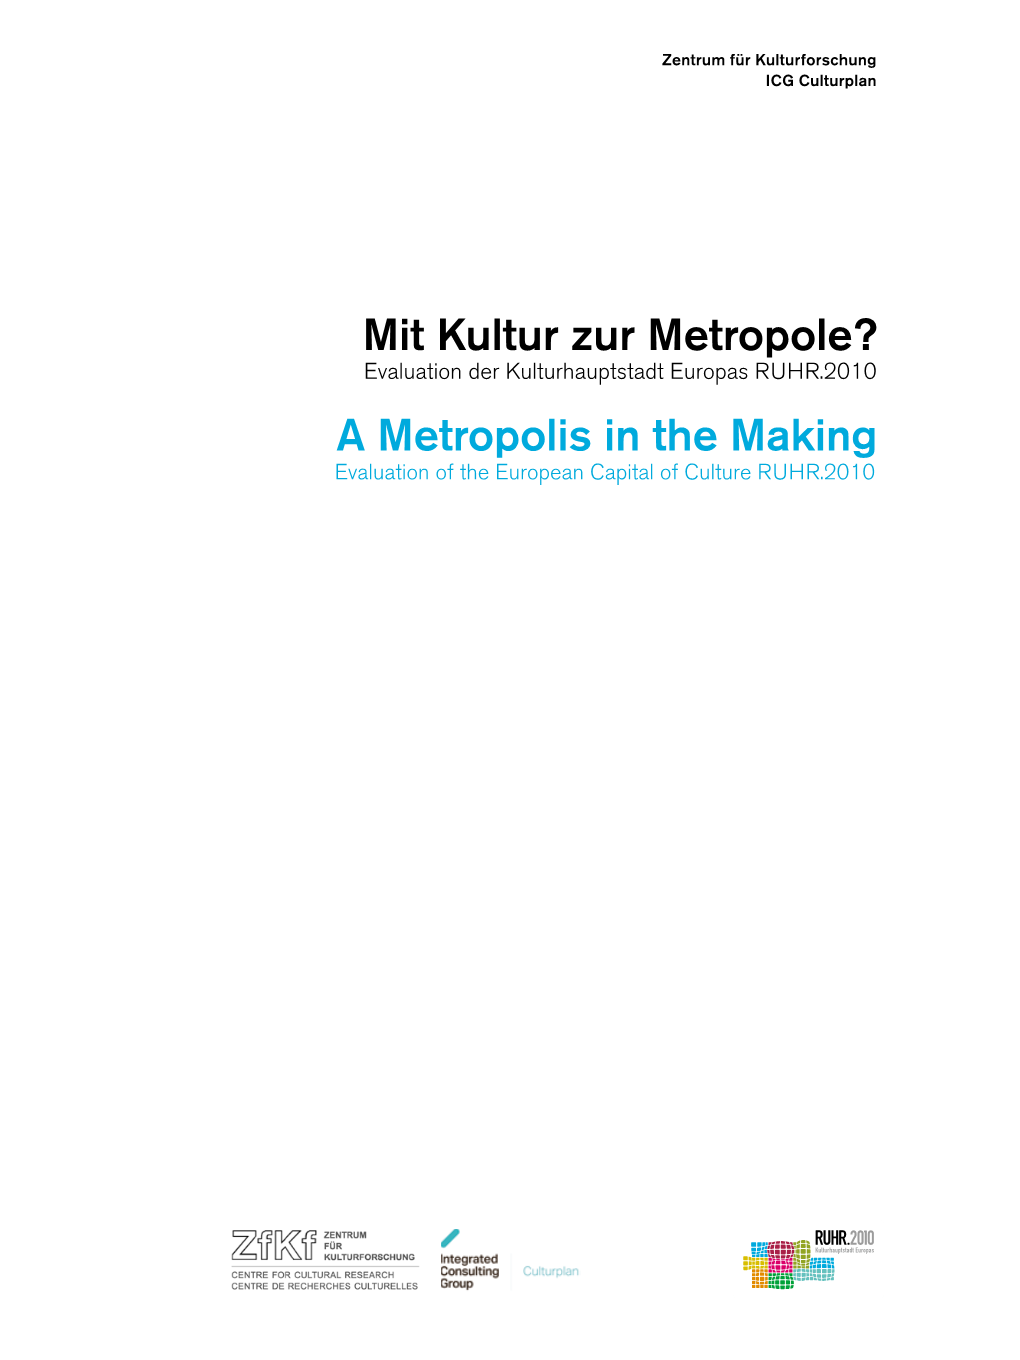 Mit Kultur Zur Metropole? a Metropolis in the Making